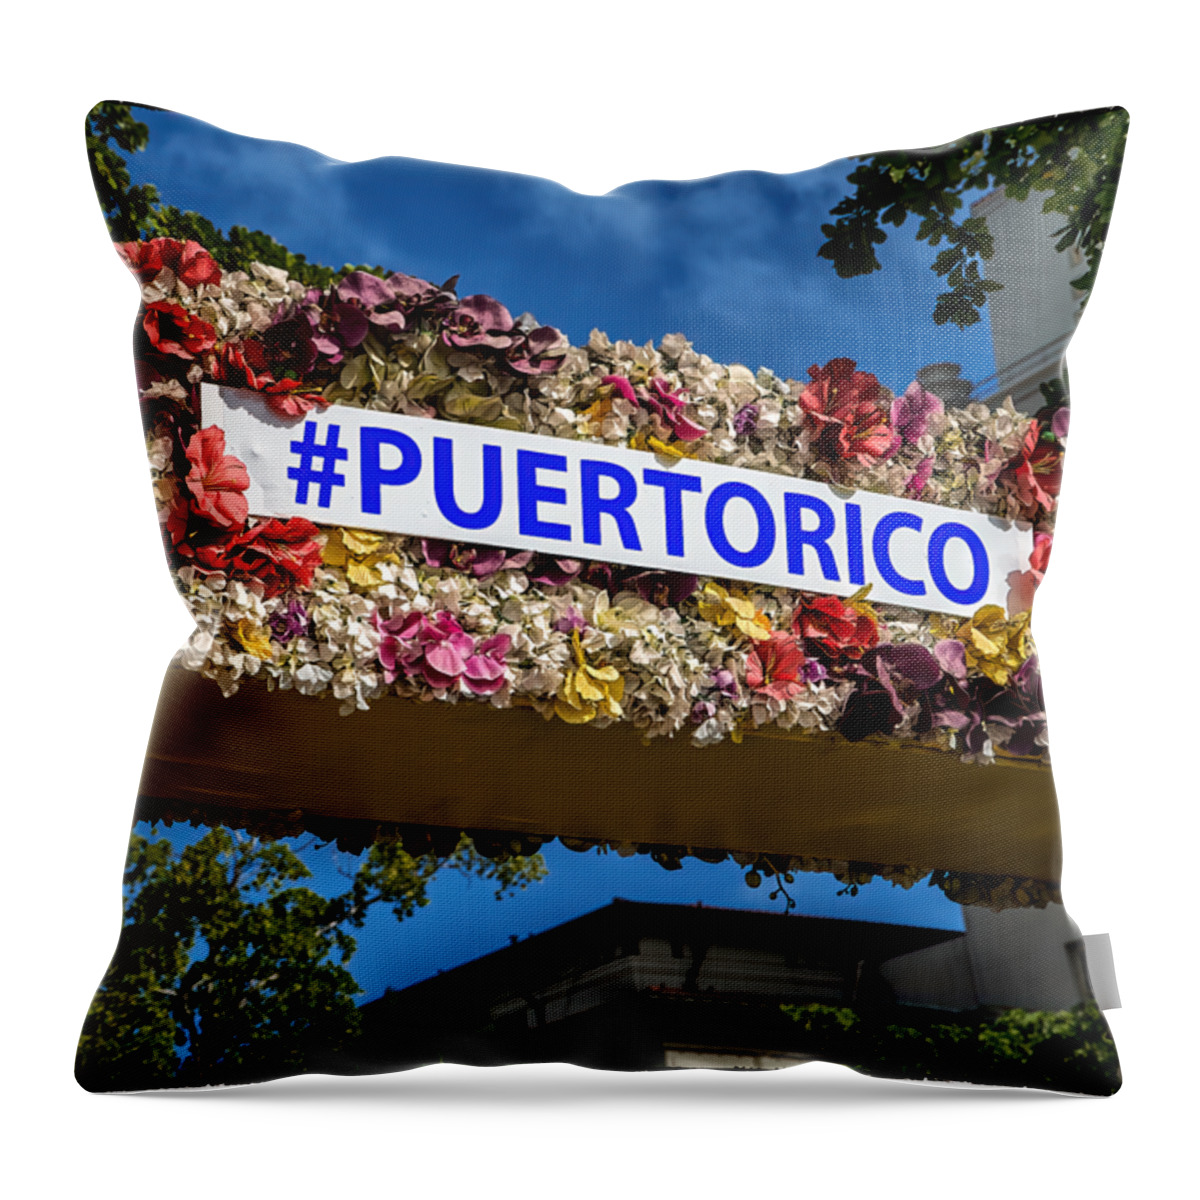 Old San Juan Throw Pillow featuring the photograph PUERTORICO hashtag, San Juan, Puerto Rico. by Phil Cardamone